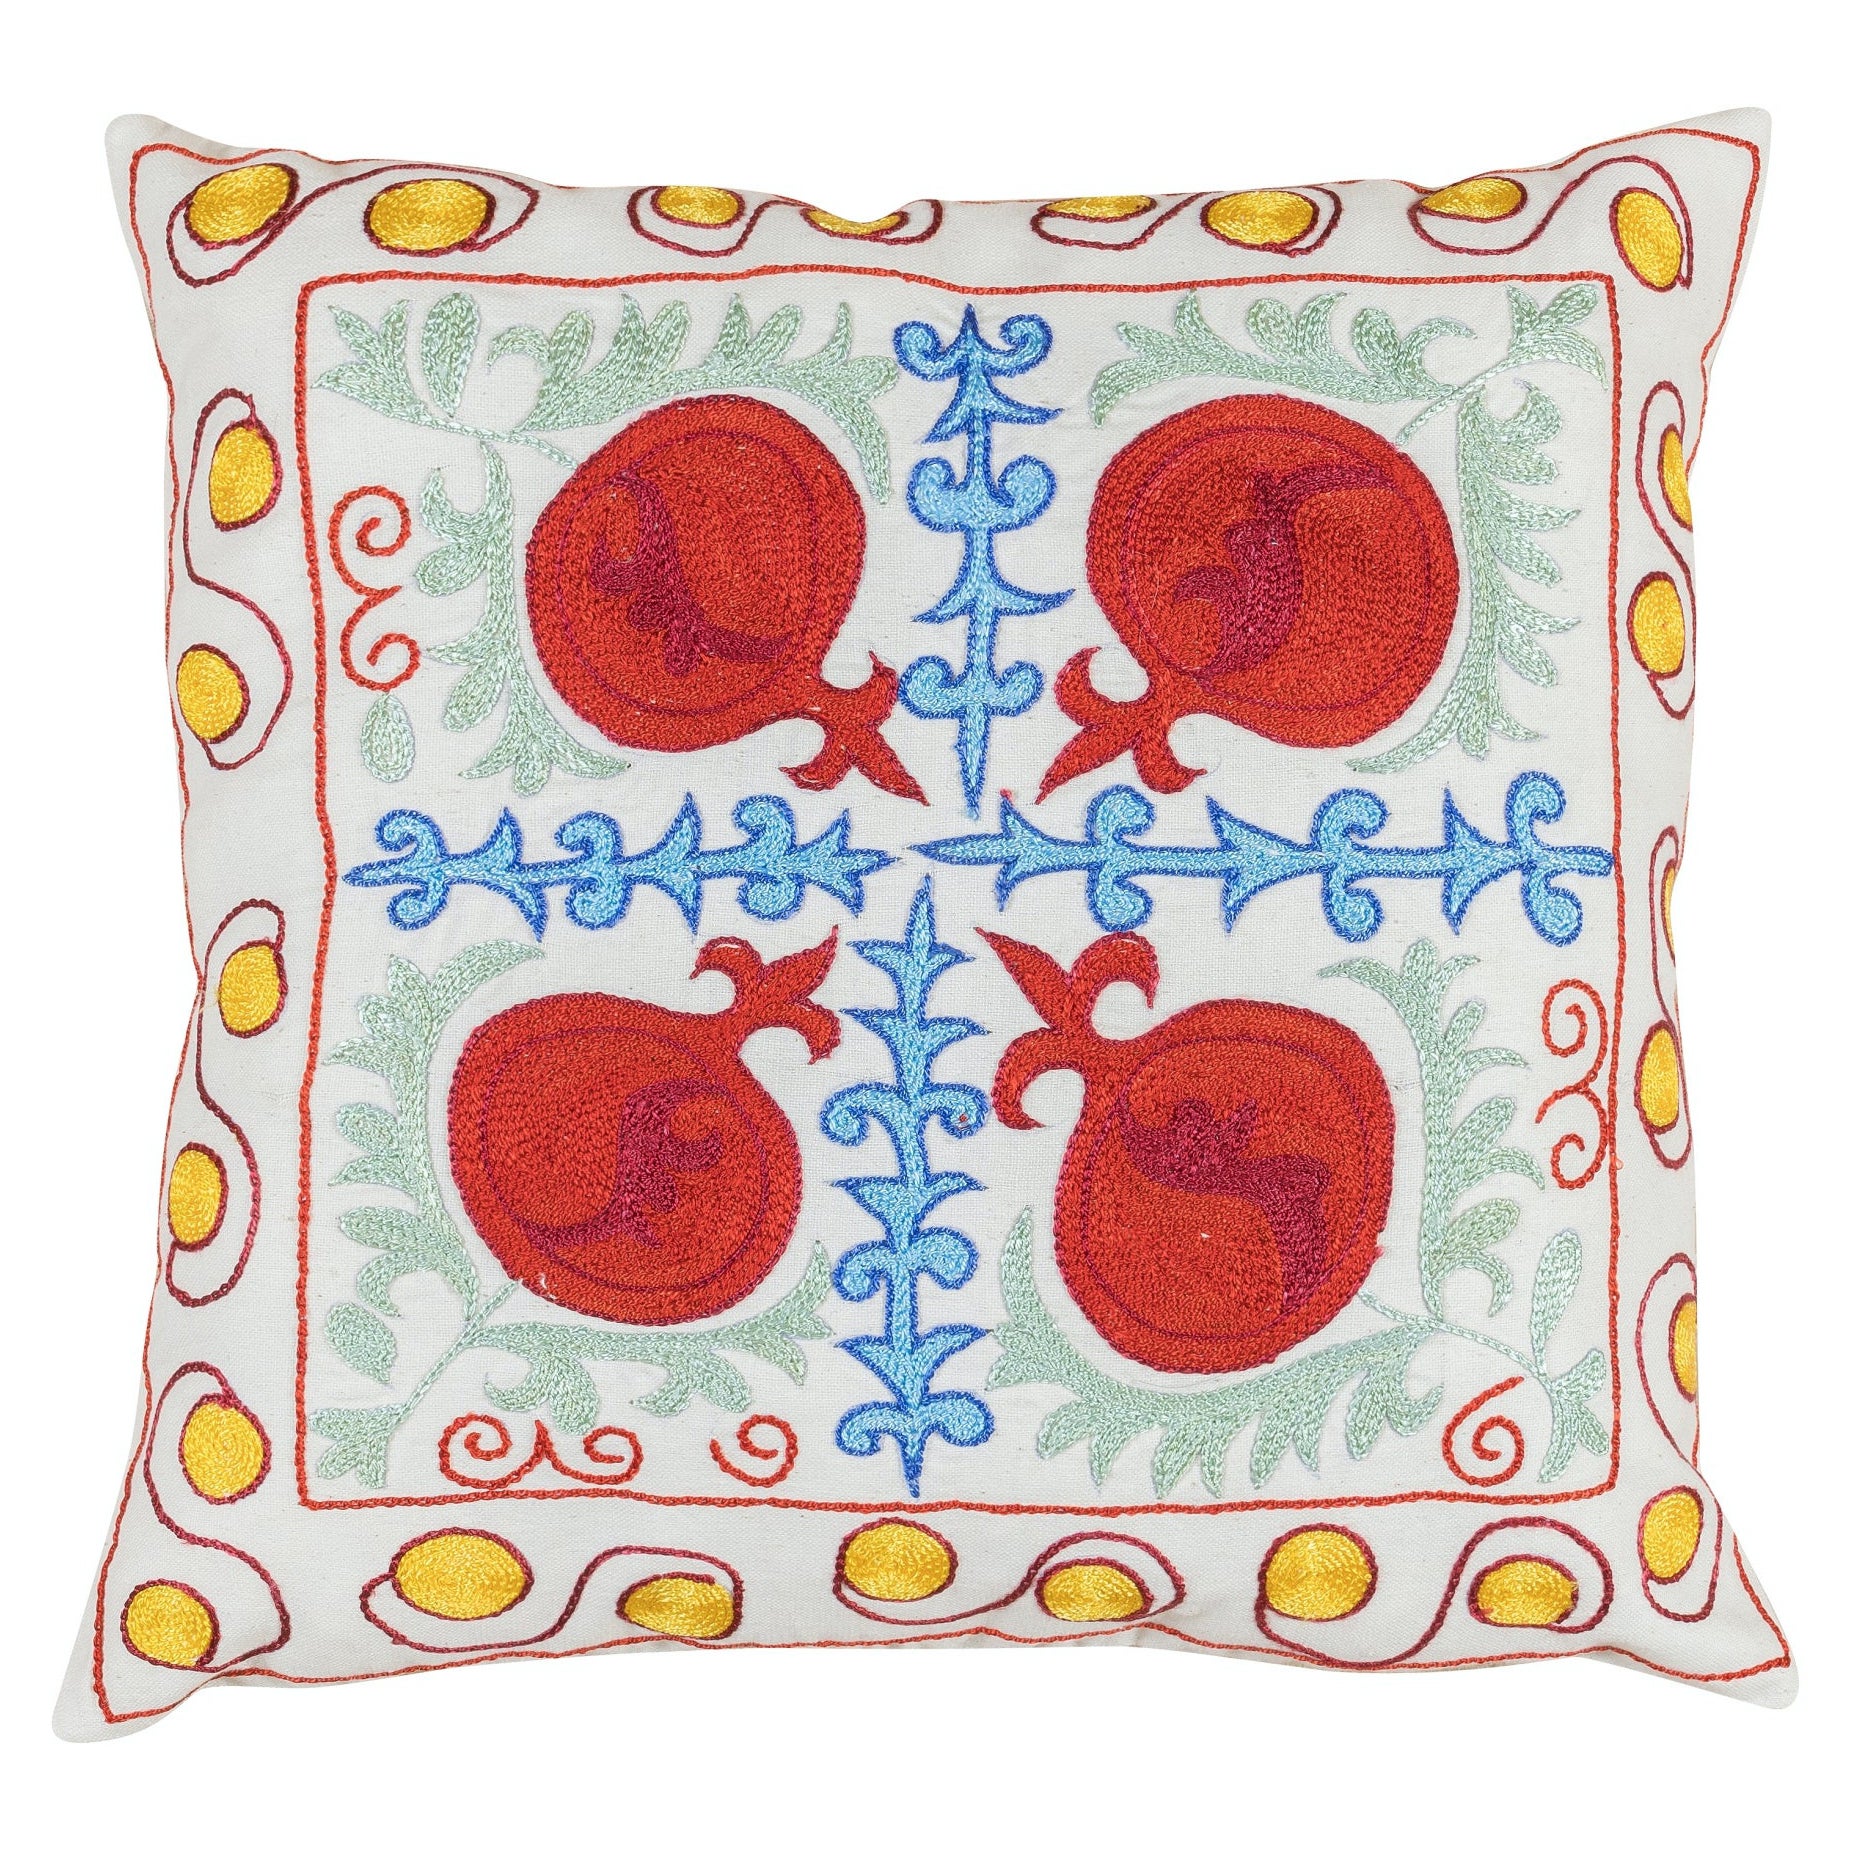 Splendid Silk Hand Embroidery Uzbek Suzani Textile Cushion Cover For Sale